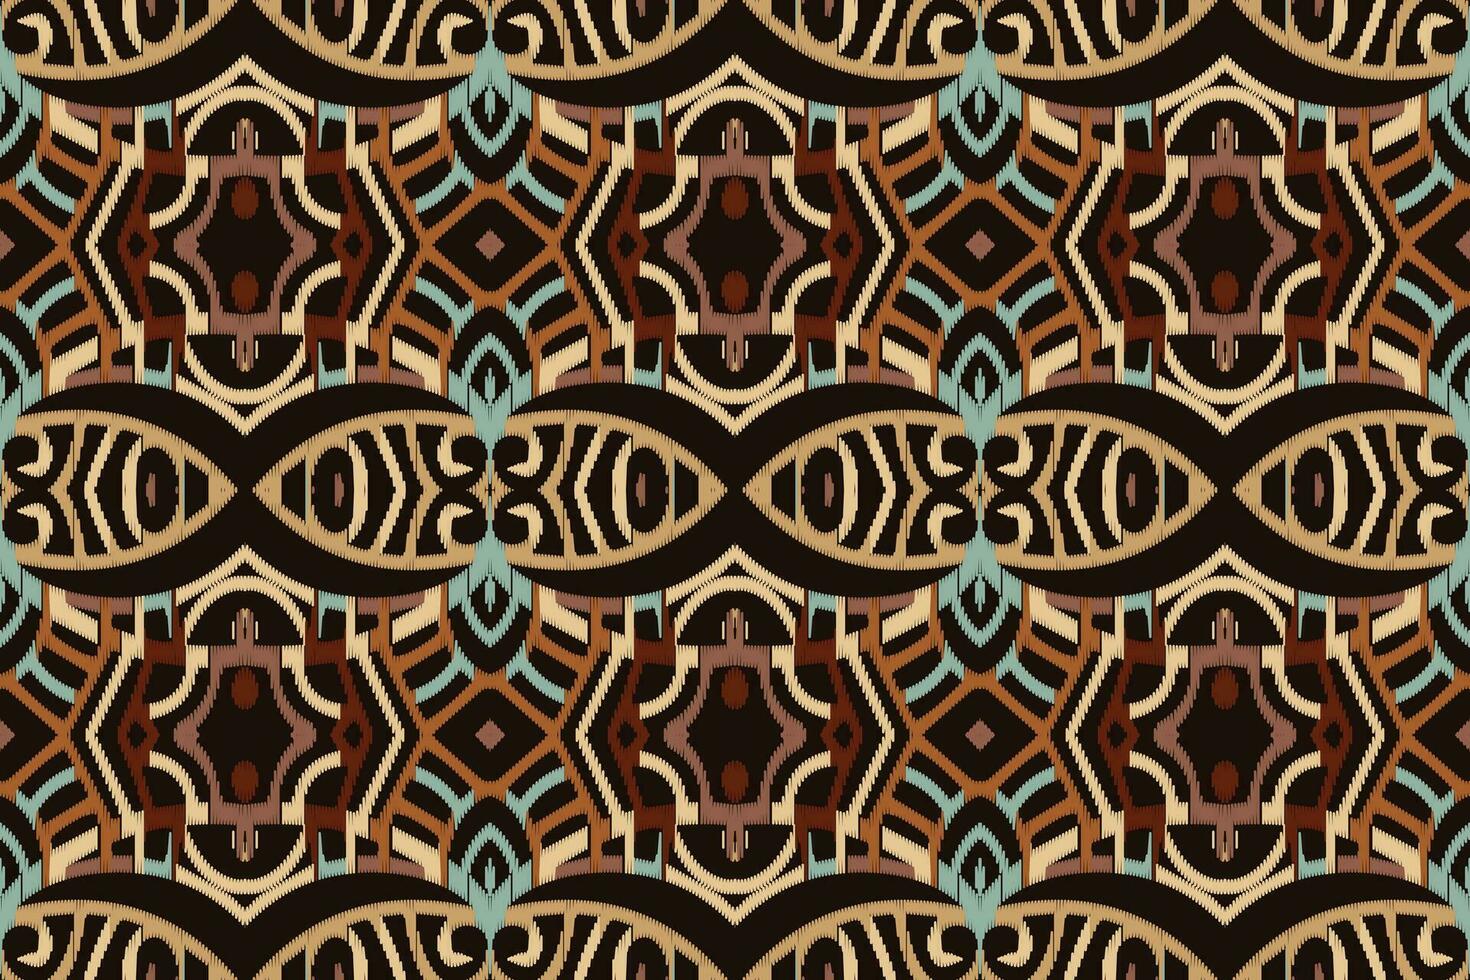 motivo ikat cachemir bordado antecedentes. ikat cheurón geométrico étnico oriental modelo tradicional.azteca estilo resumen vector ilustración.diseño para textura,tela,ropa,envoltura,pareo.